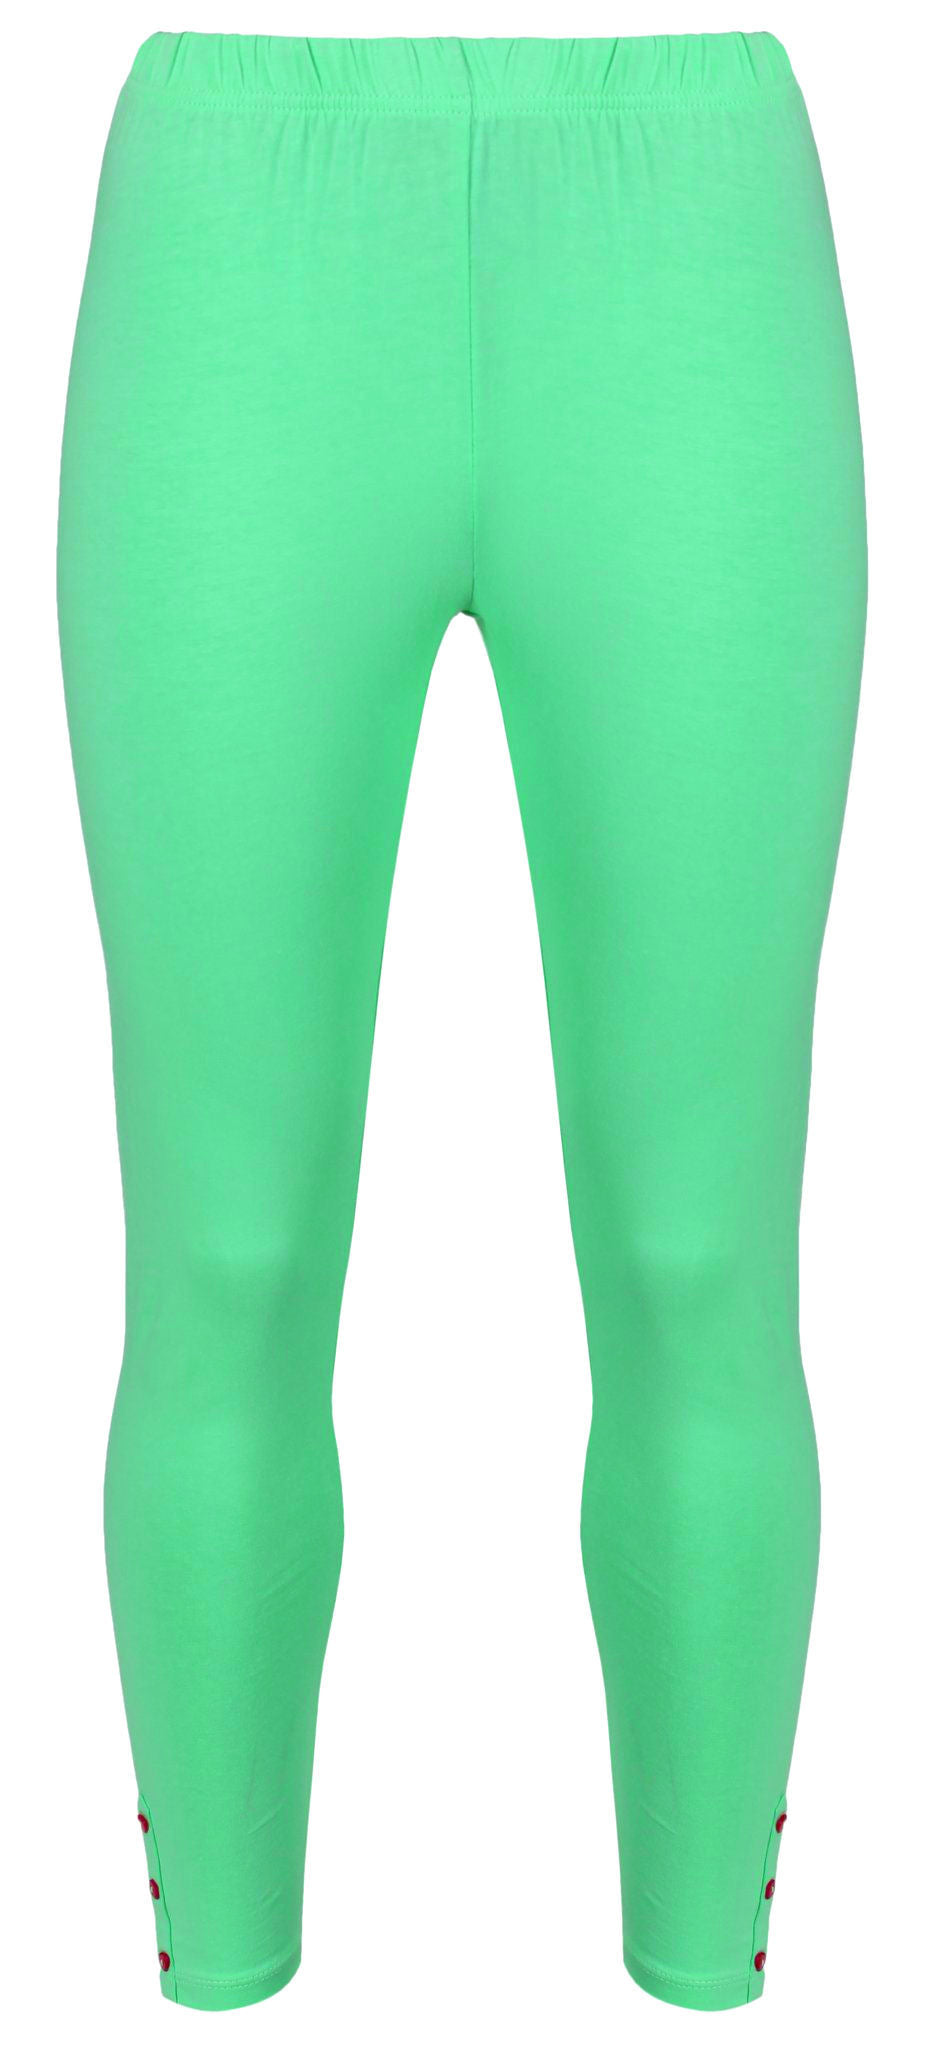 Mudd & Water women's organic cotton full length Lucky leggings in Sea Green.